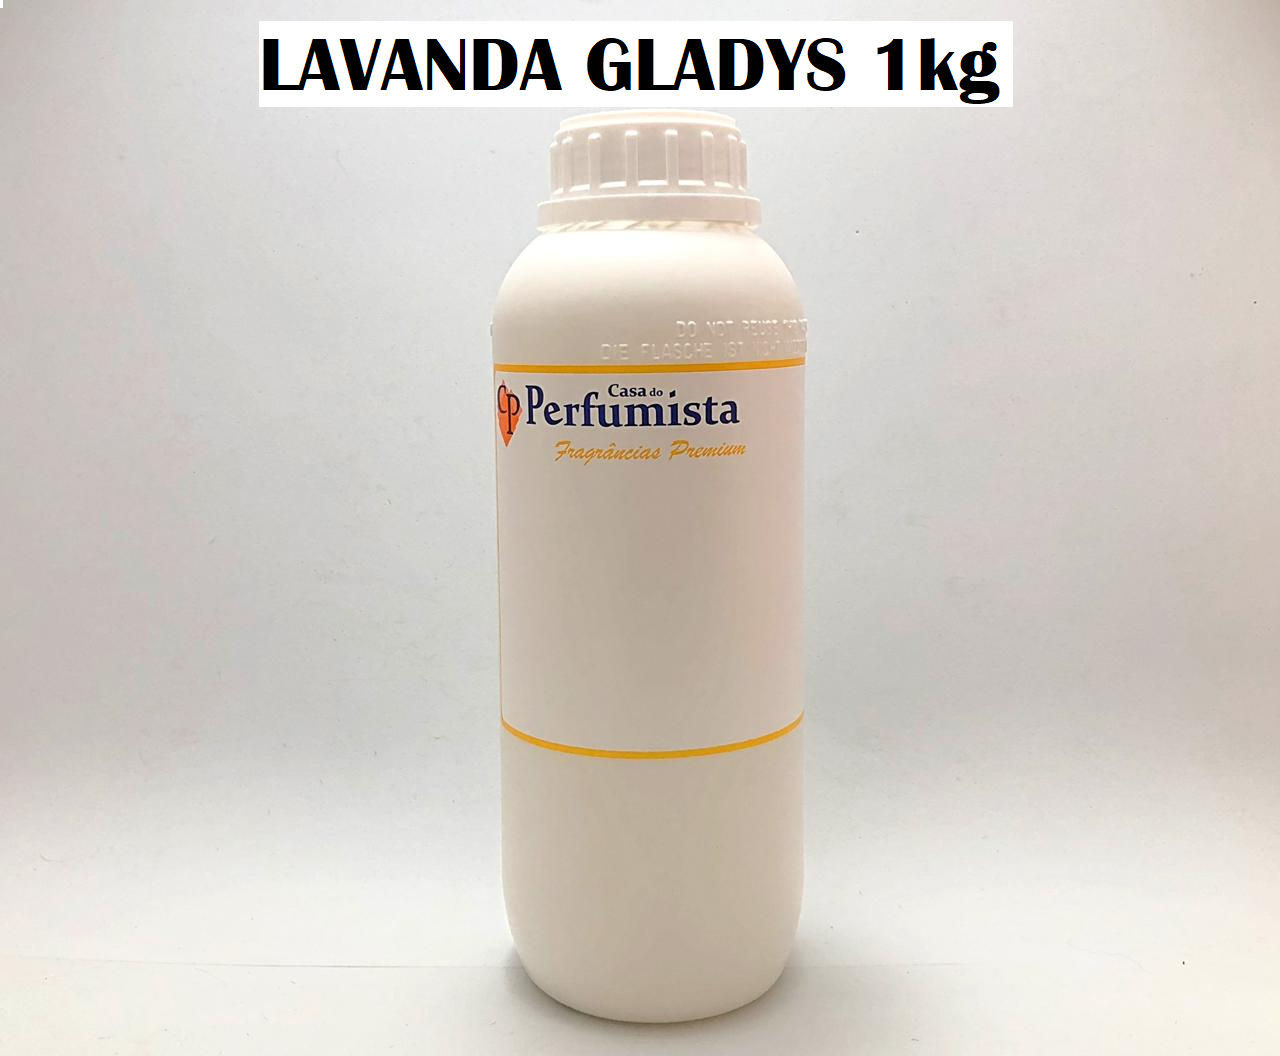 LAVANDA GLADYS - 1kg